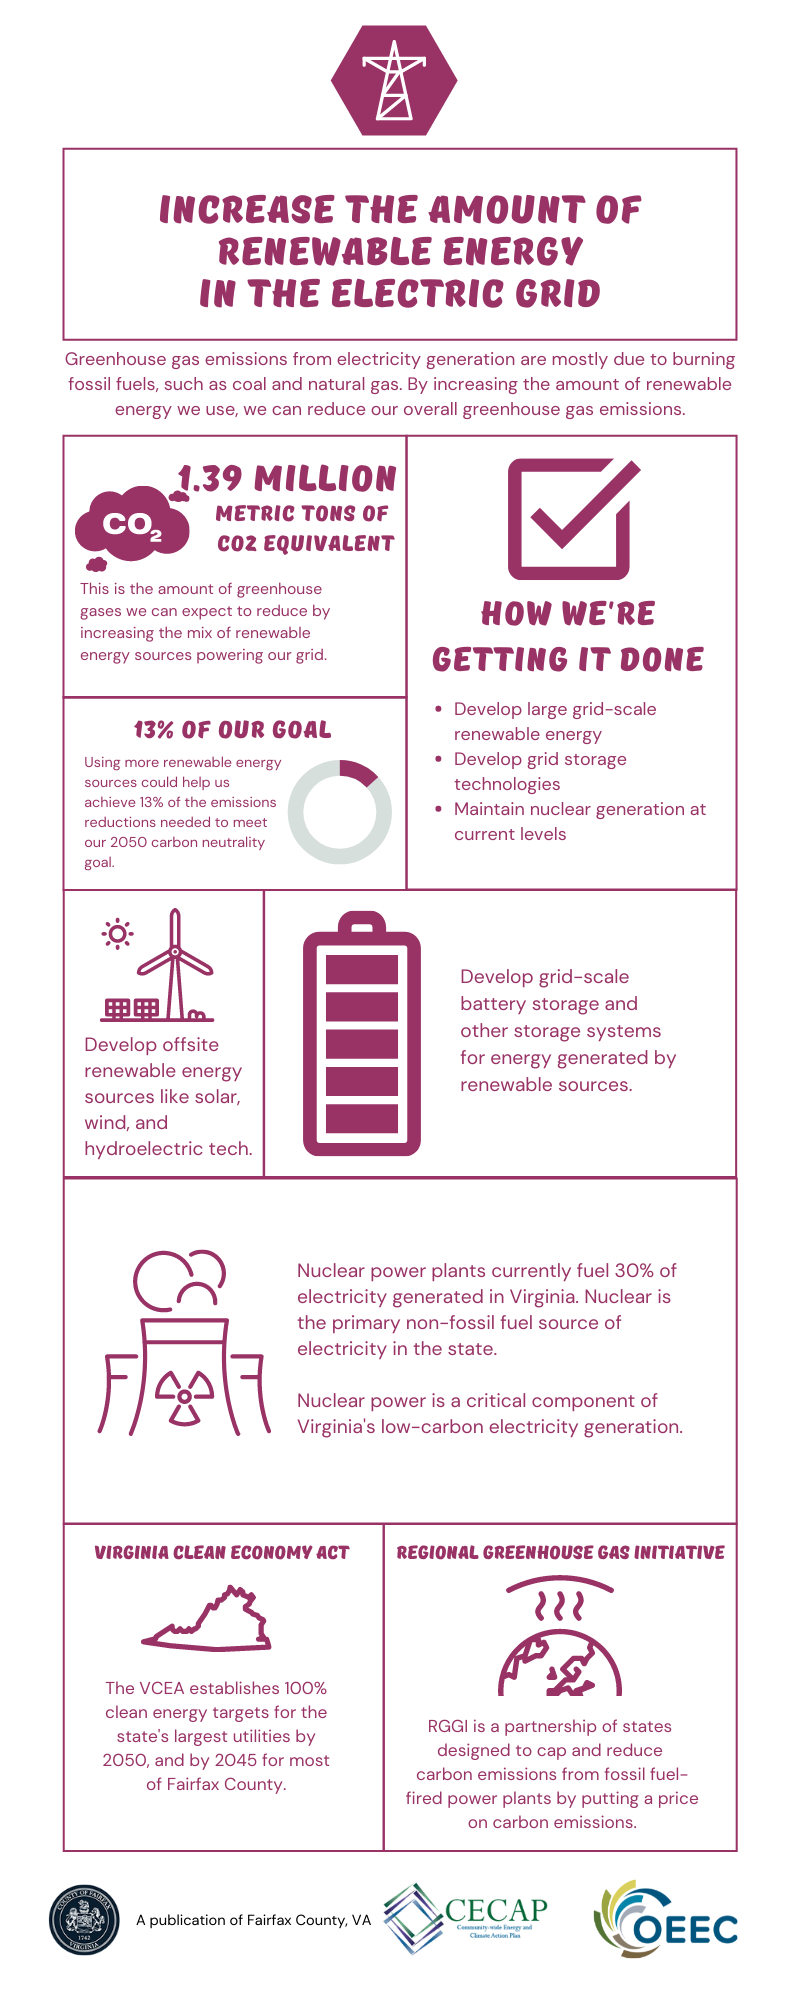 CECAP renewable energy in the grid infographic